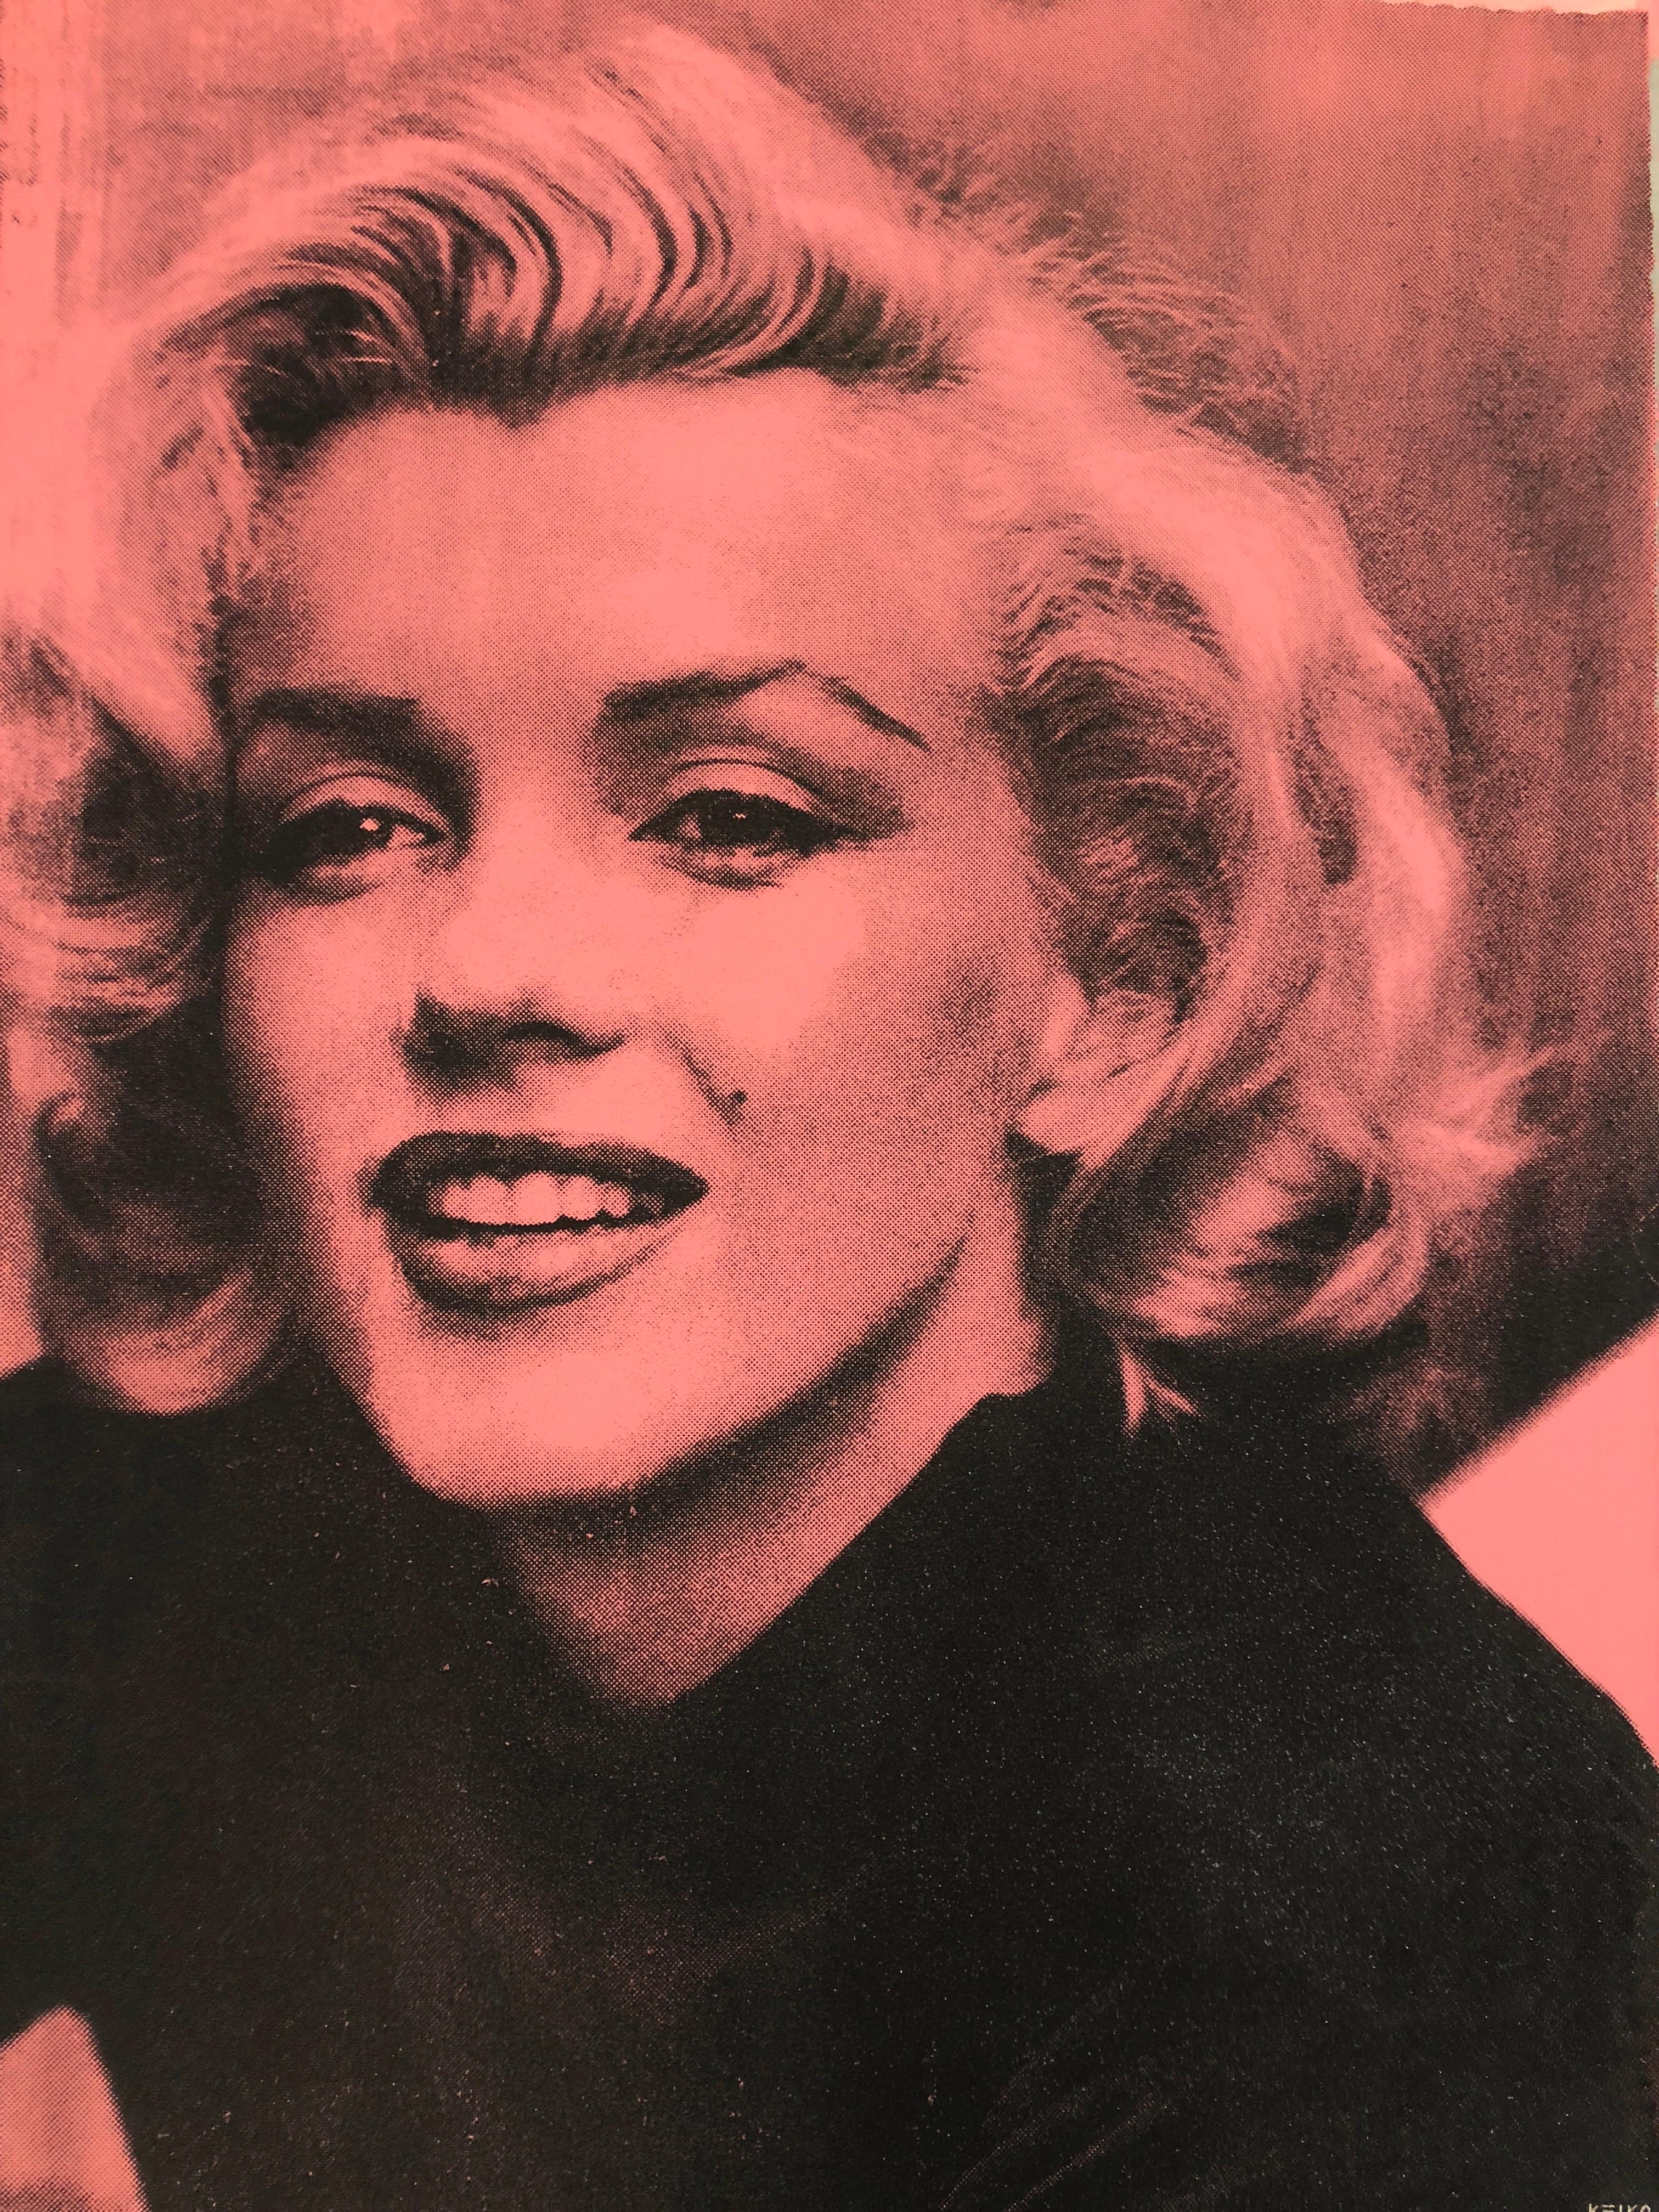 Keiko Noah Black and White Photograph - Marilyn Smile (Rose, Diamond Dust)